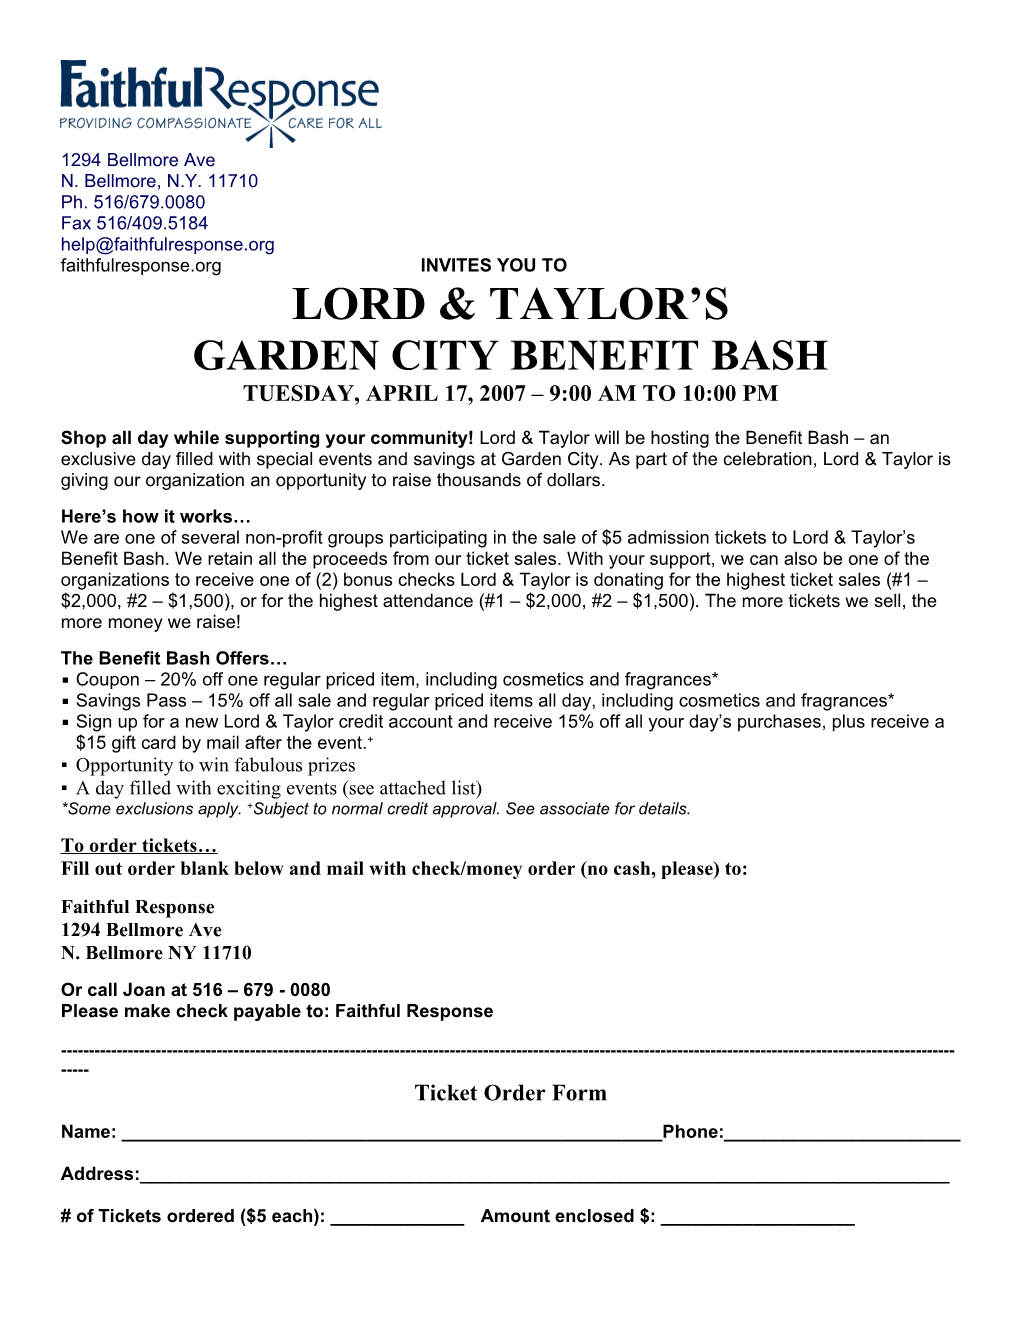 Garden City Benefit Bash